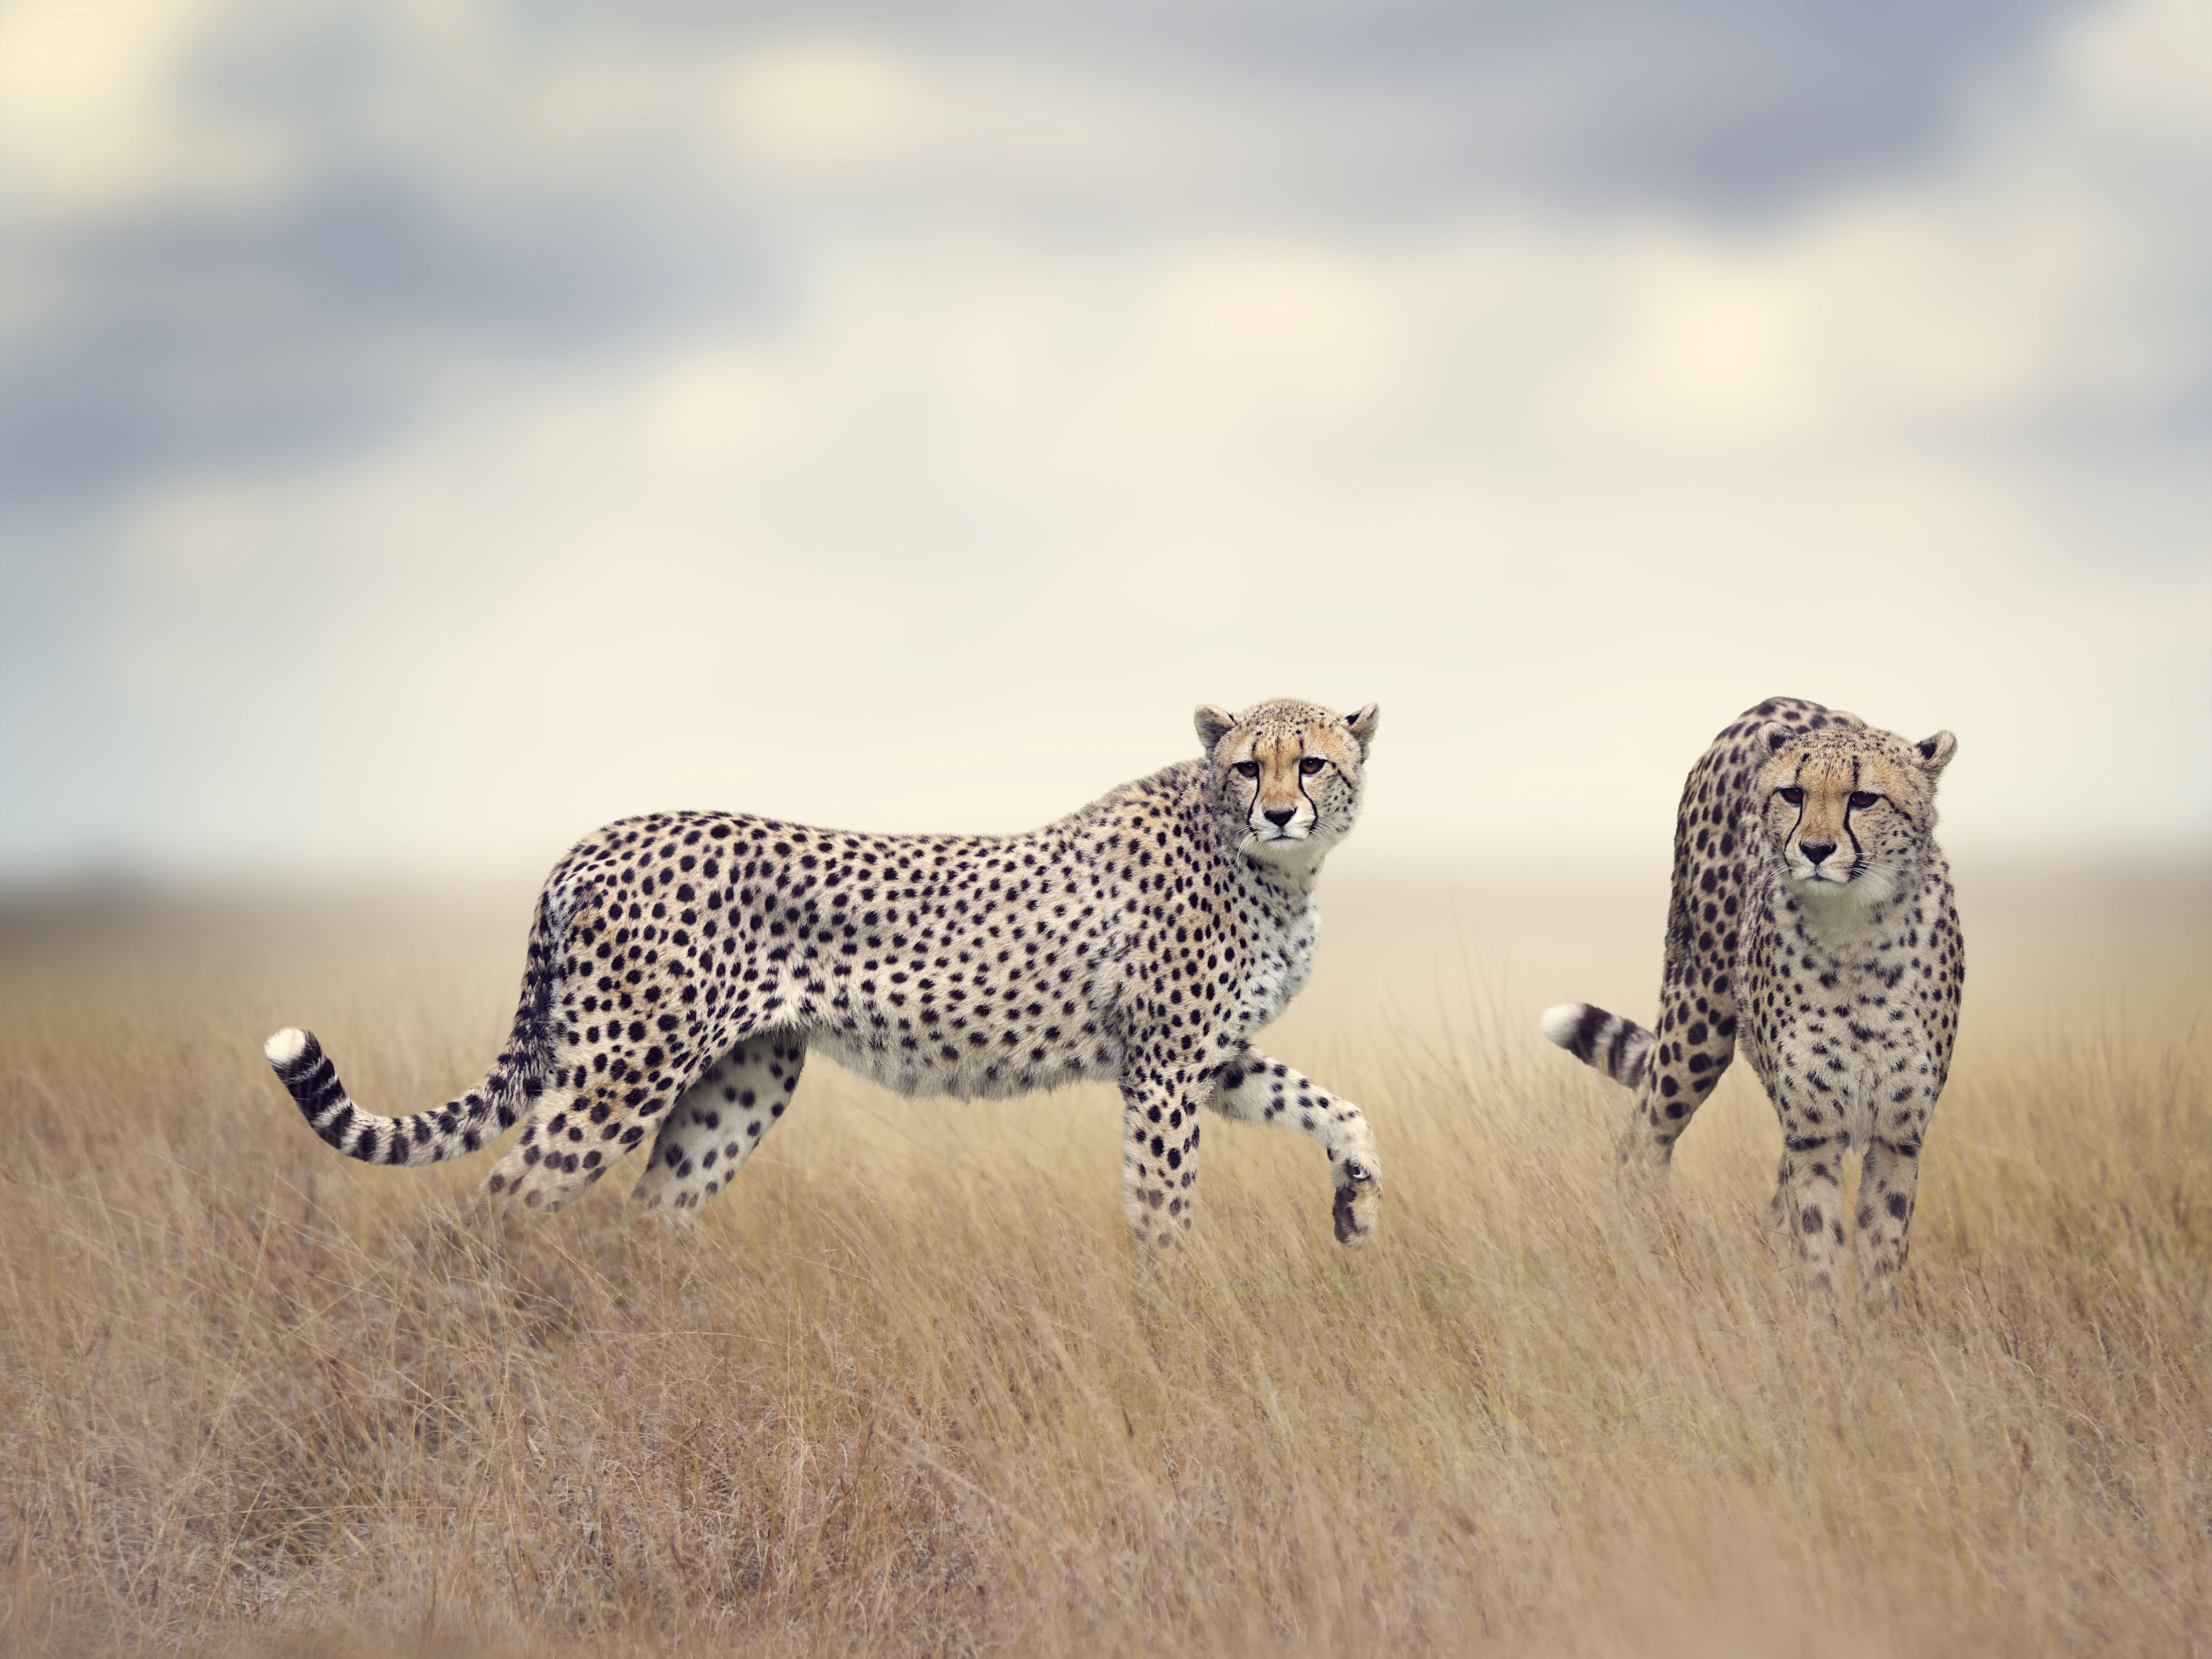 Cheetah 4k Ultra HD Wallpaper